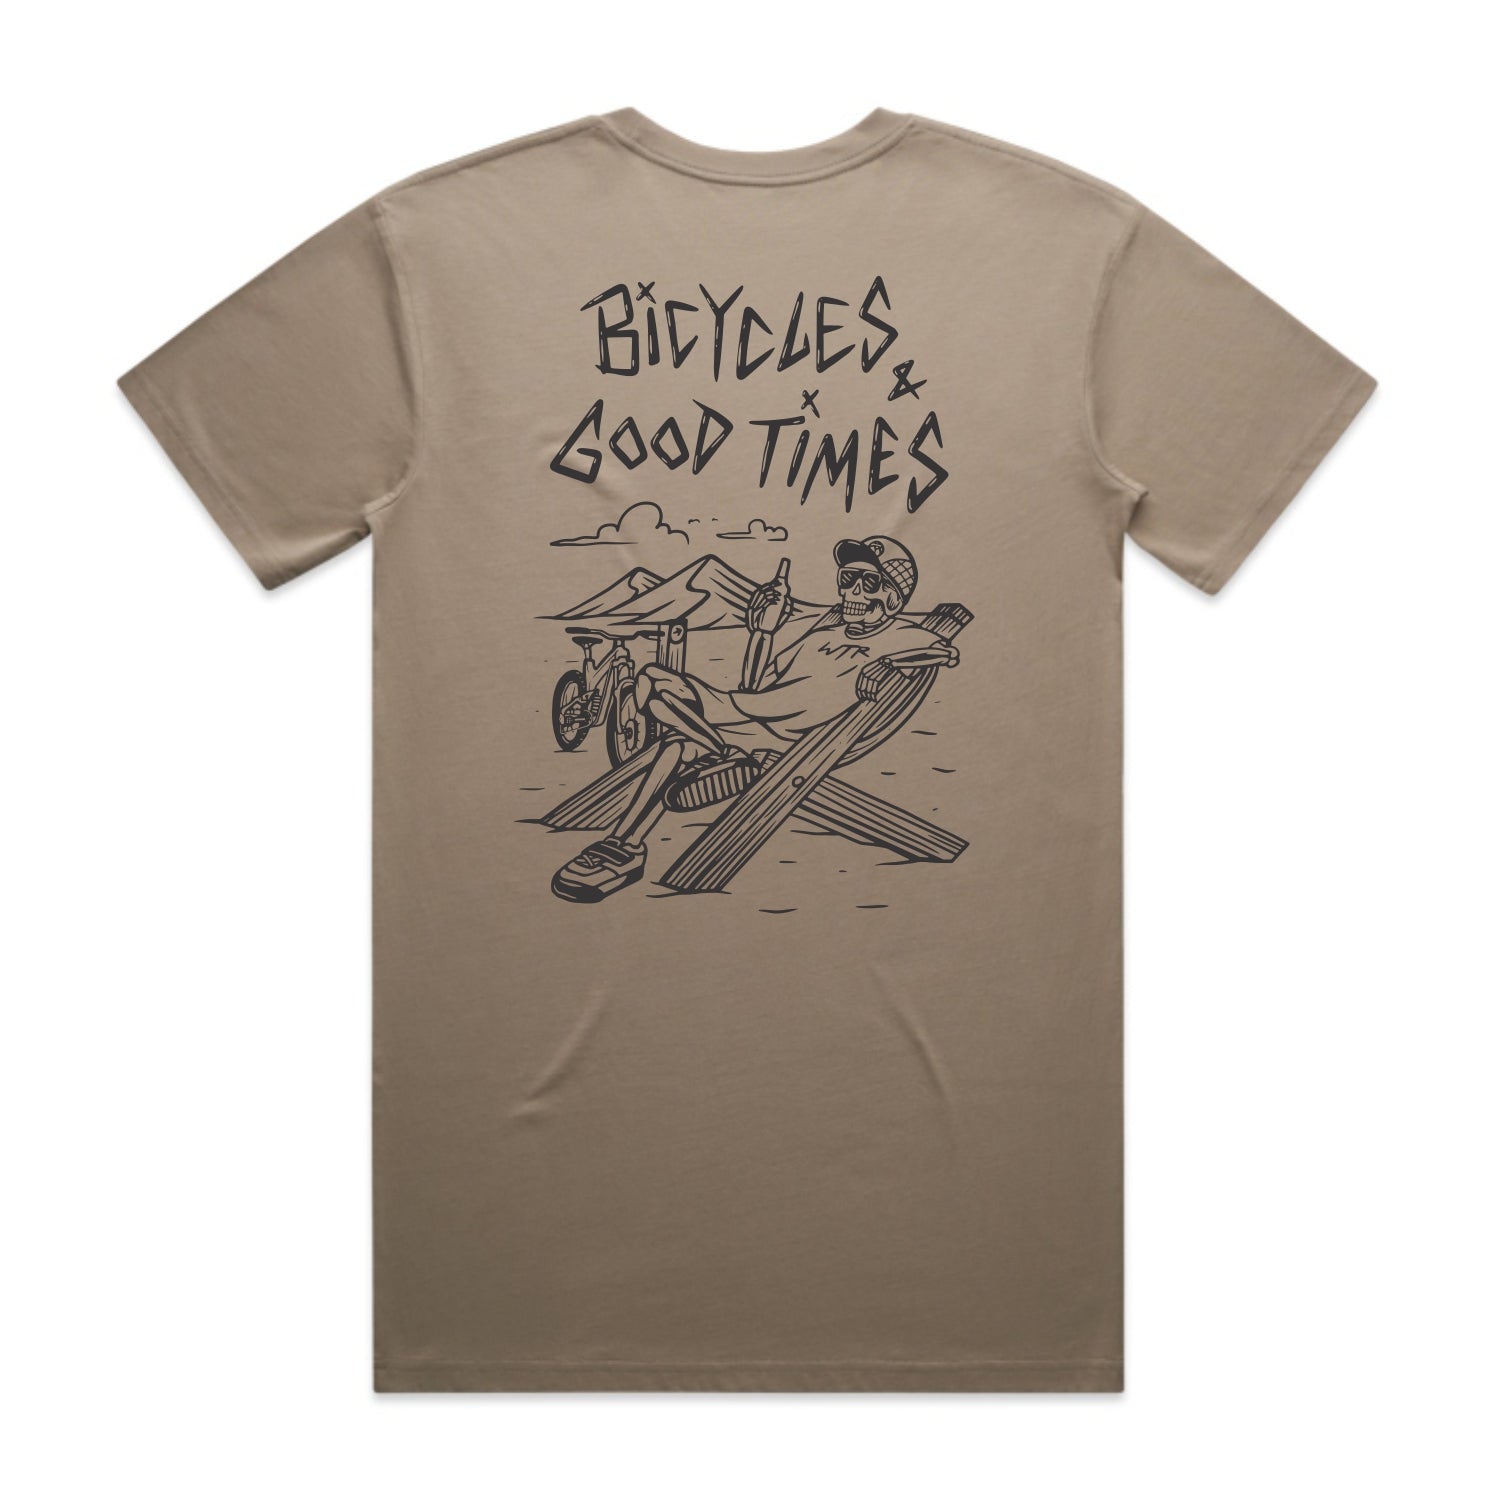 Bicycles & Good Times T-shirt